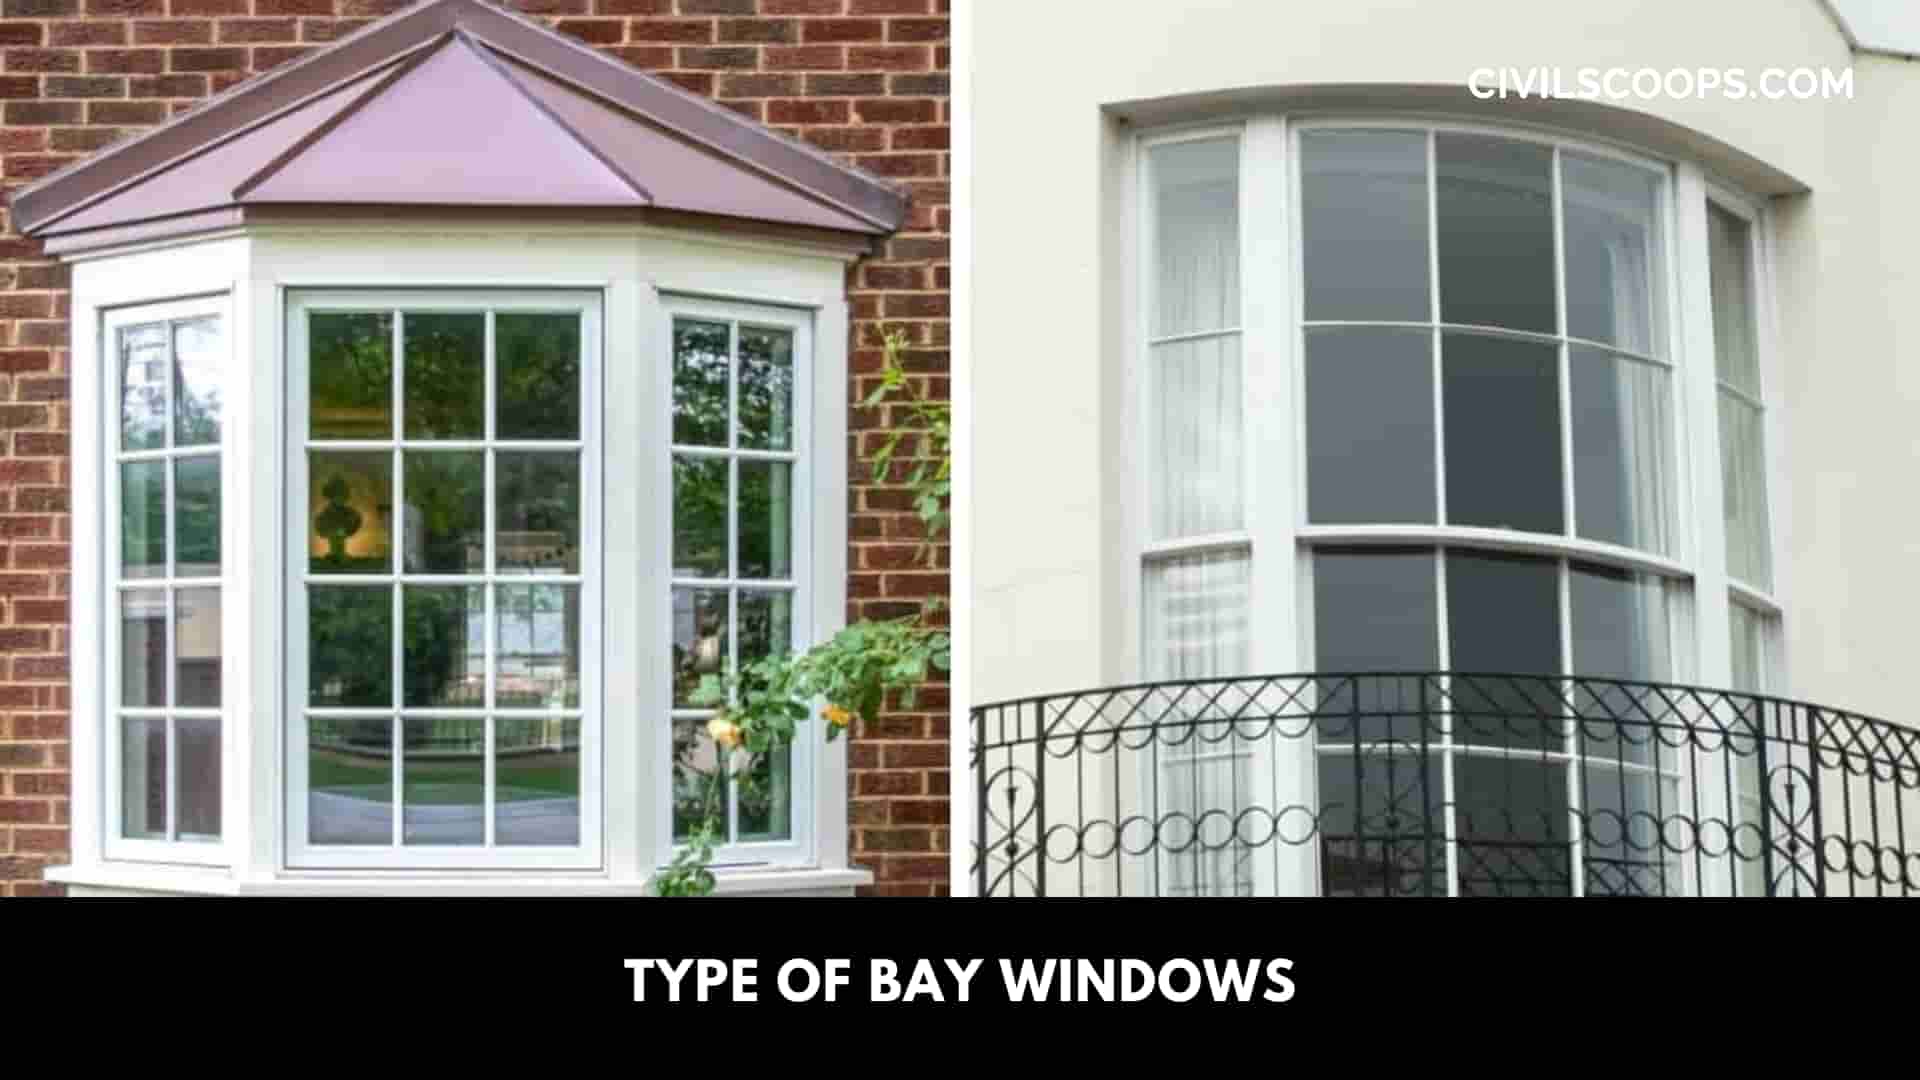 Type of Bay Windows